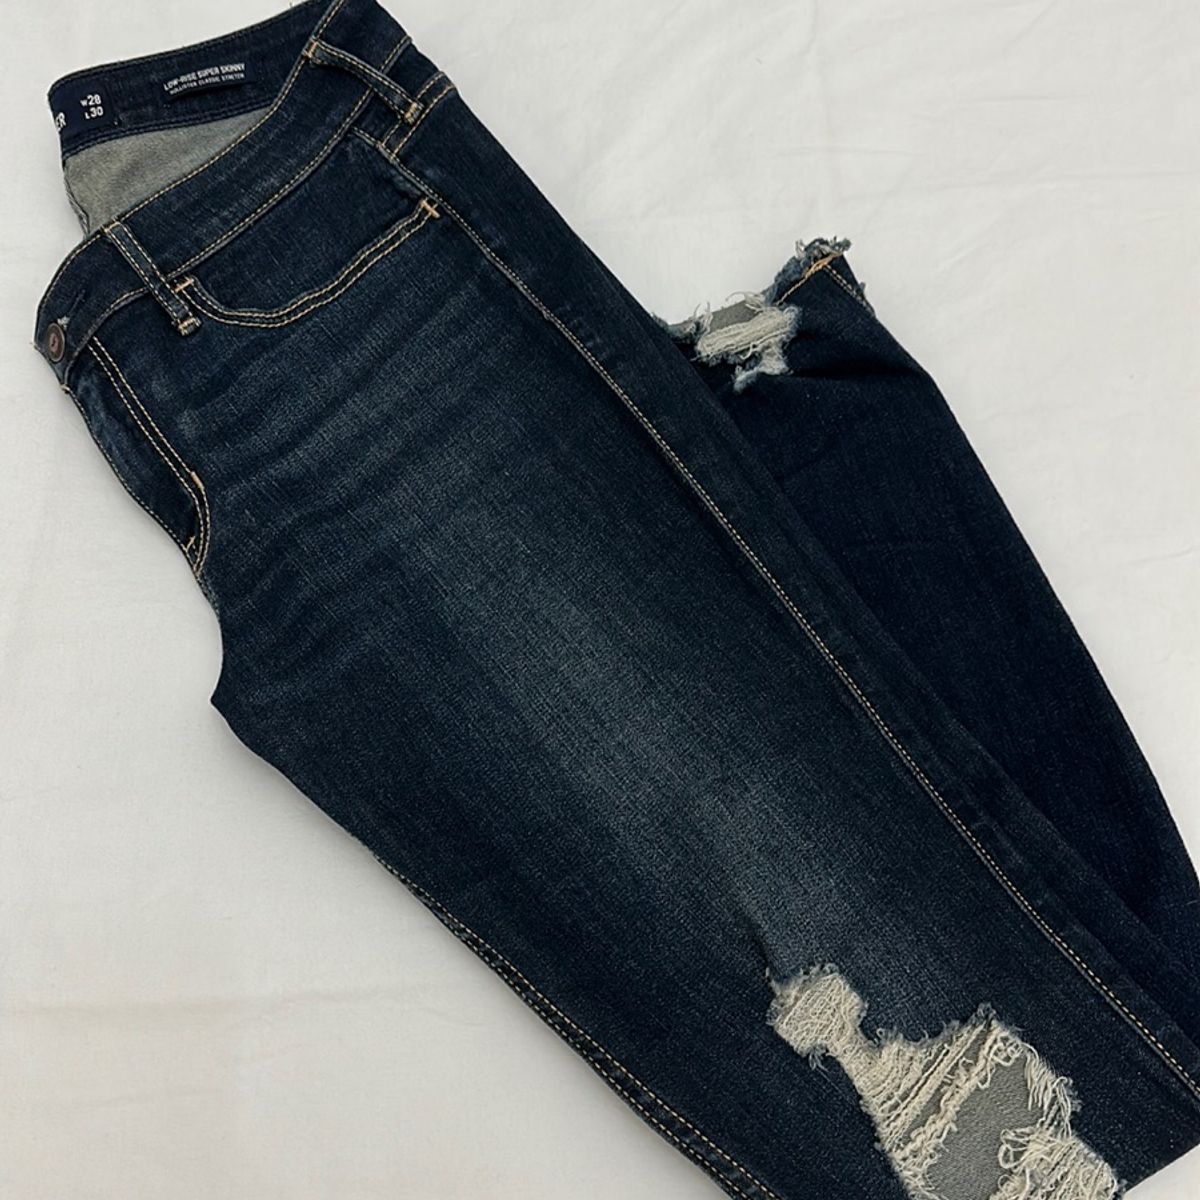 Calça Jeans Hollister Tamanho 38 - Medida Americana: 7r W28 L30